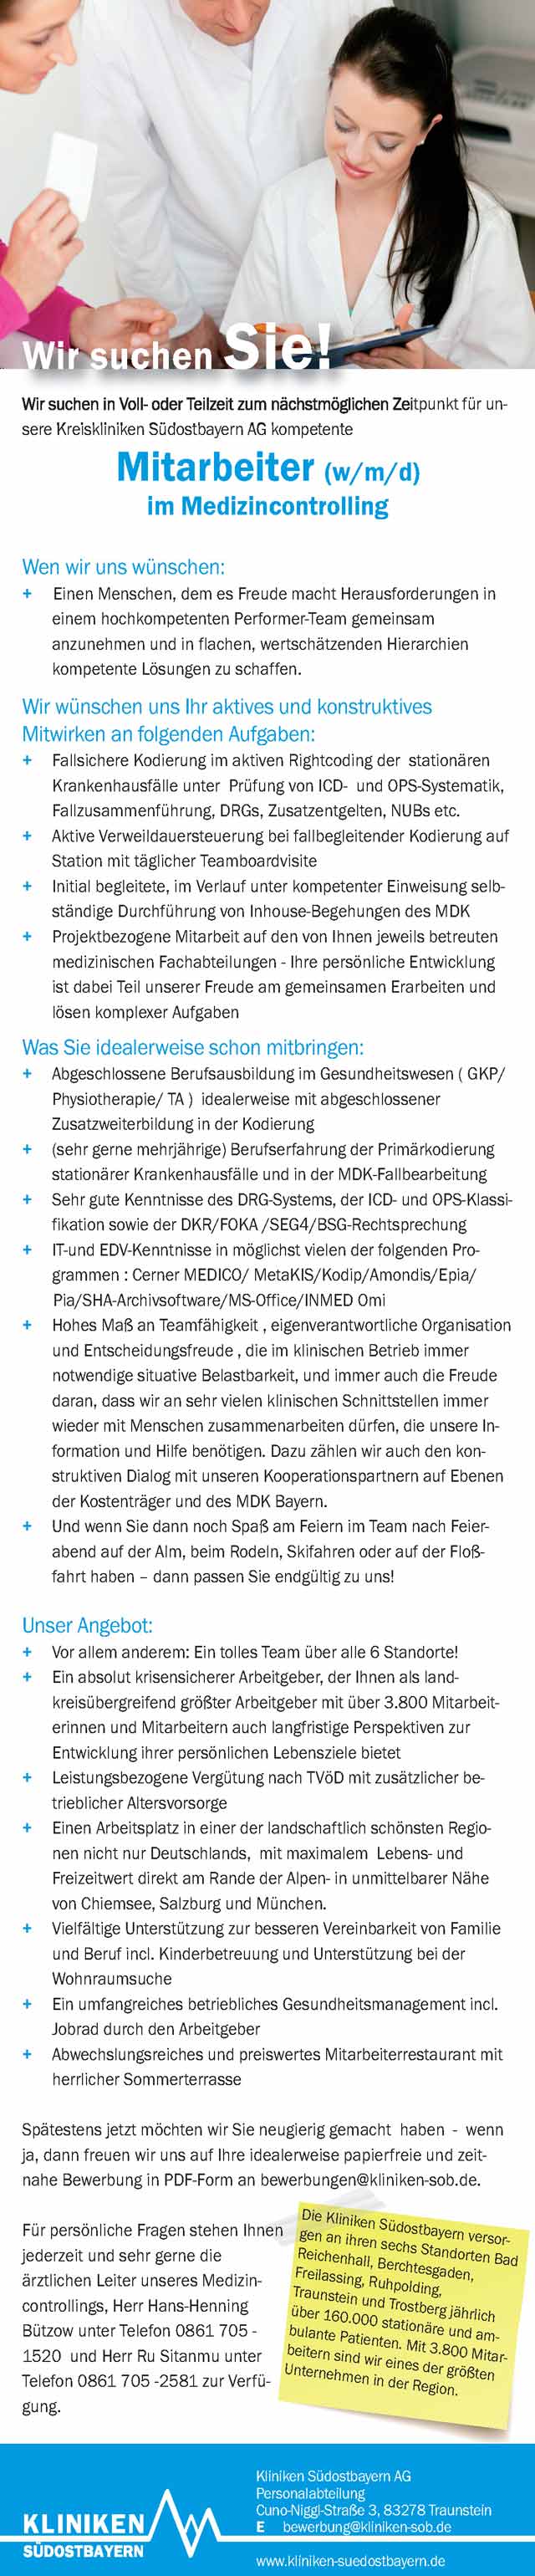 Kliniken Südostbayern AG: Medizincontroller / Kodierfachkraft (w/m/d)